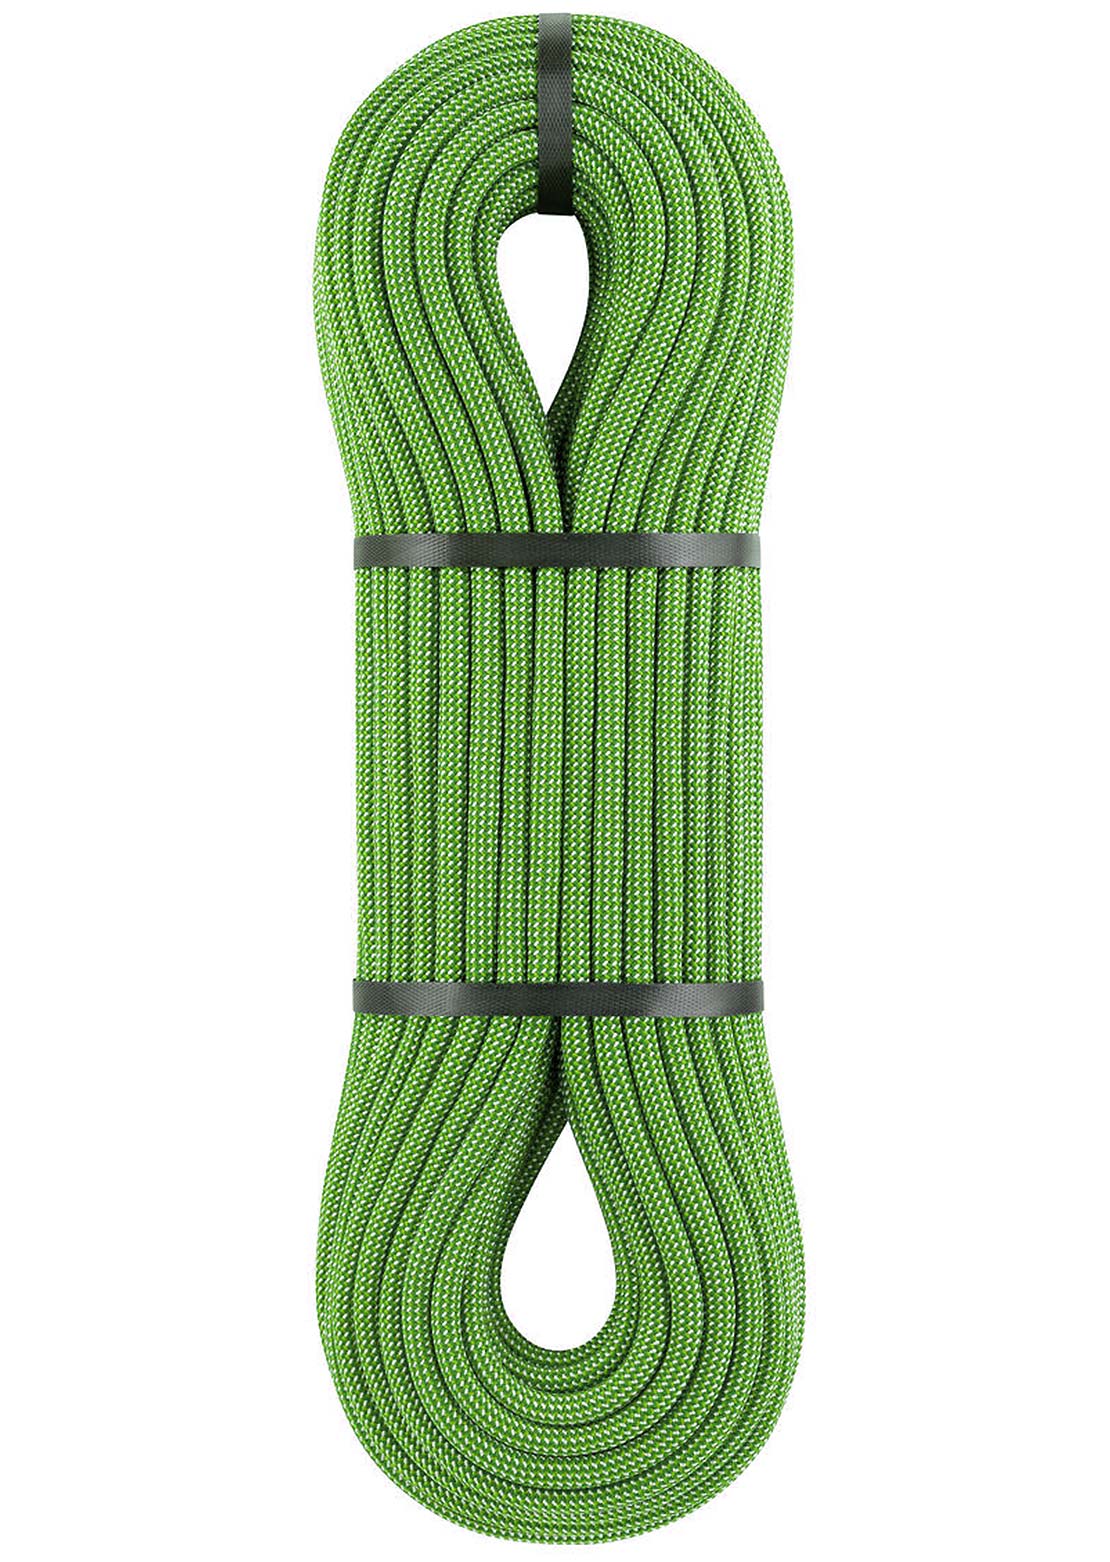 Petzl Contact 9.8mm Climbing Rope - 70m - PRFO Sports